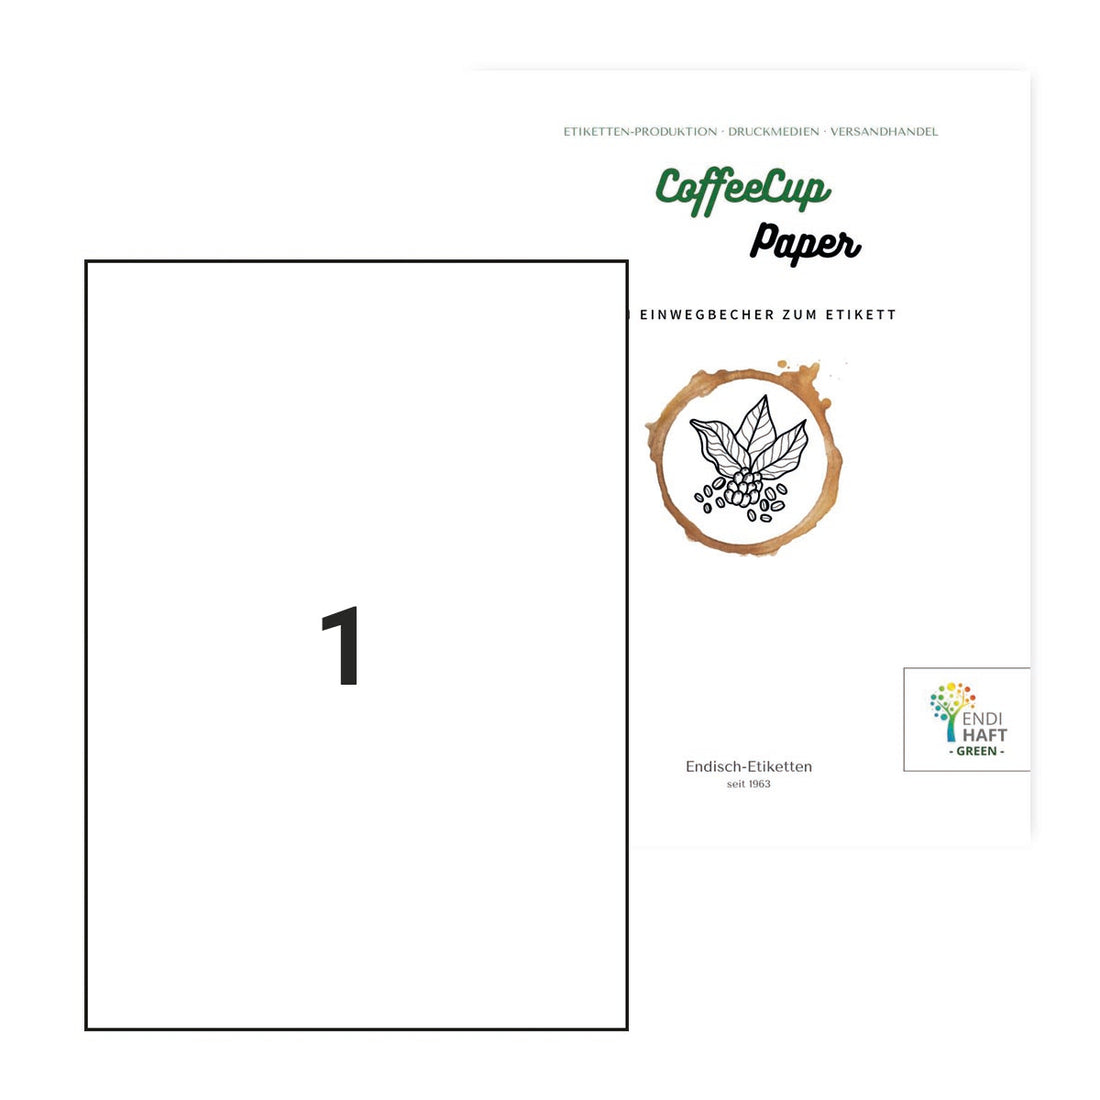 CoffeeCup Paper, 210x297 mm auf DIN A4 Bögen